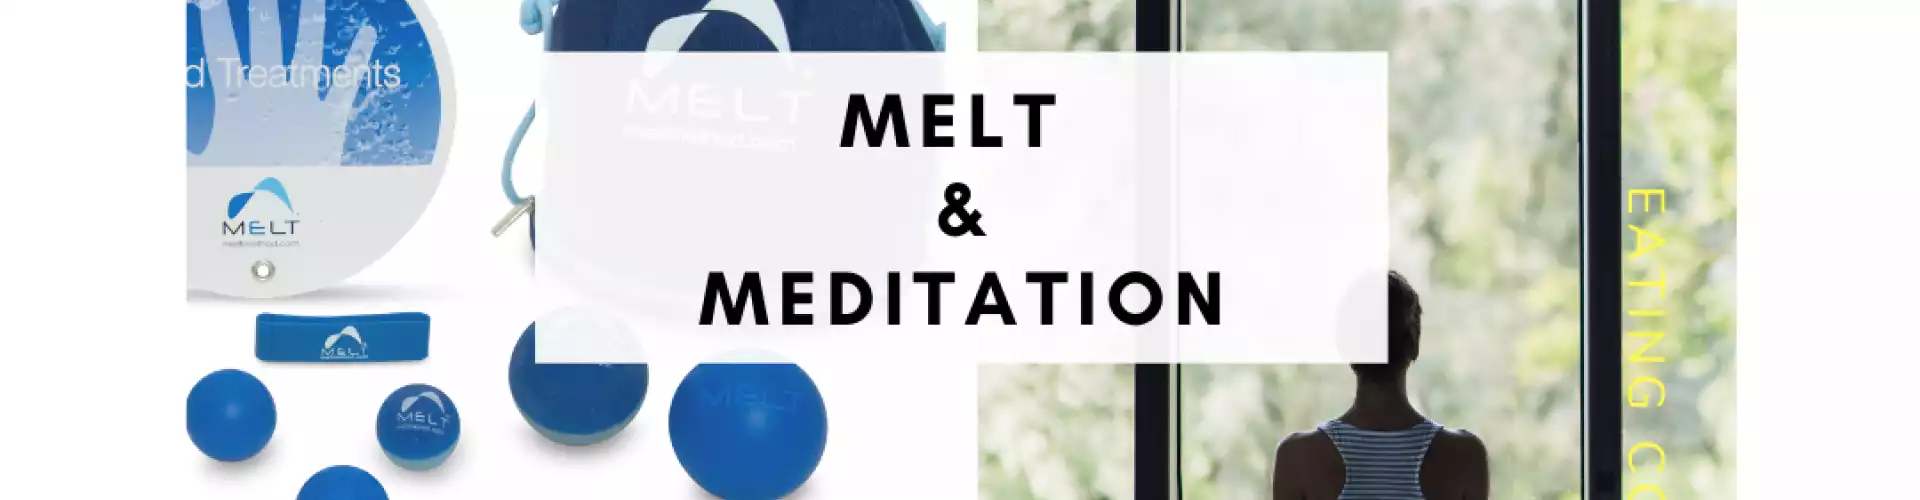 20-Minute MELT and Meditation Class